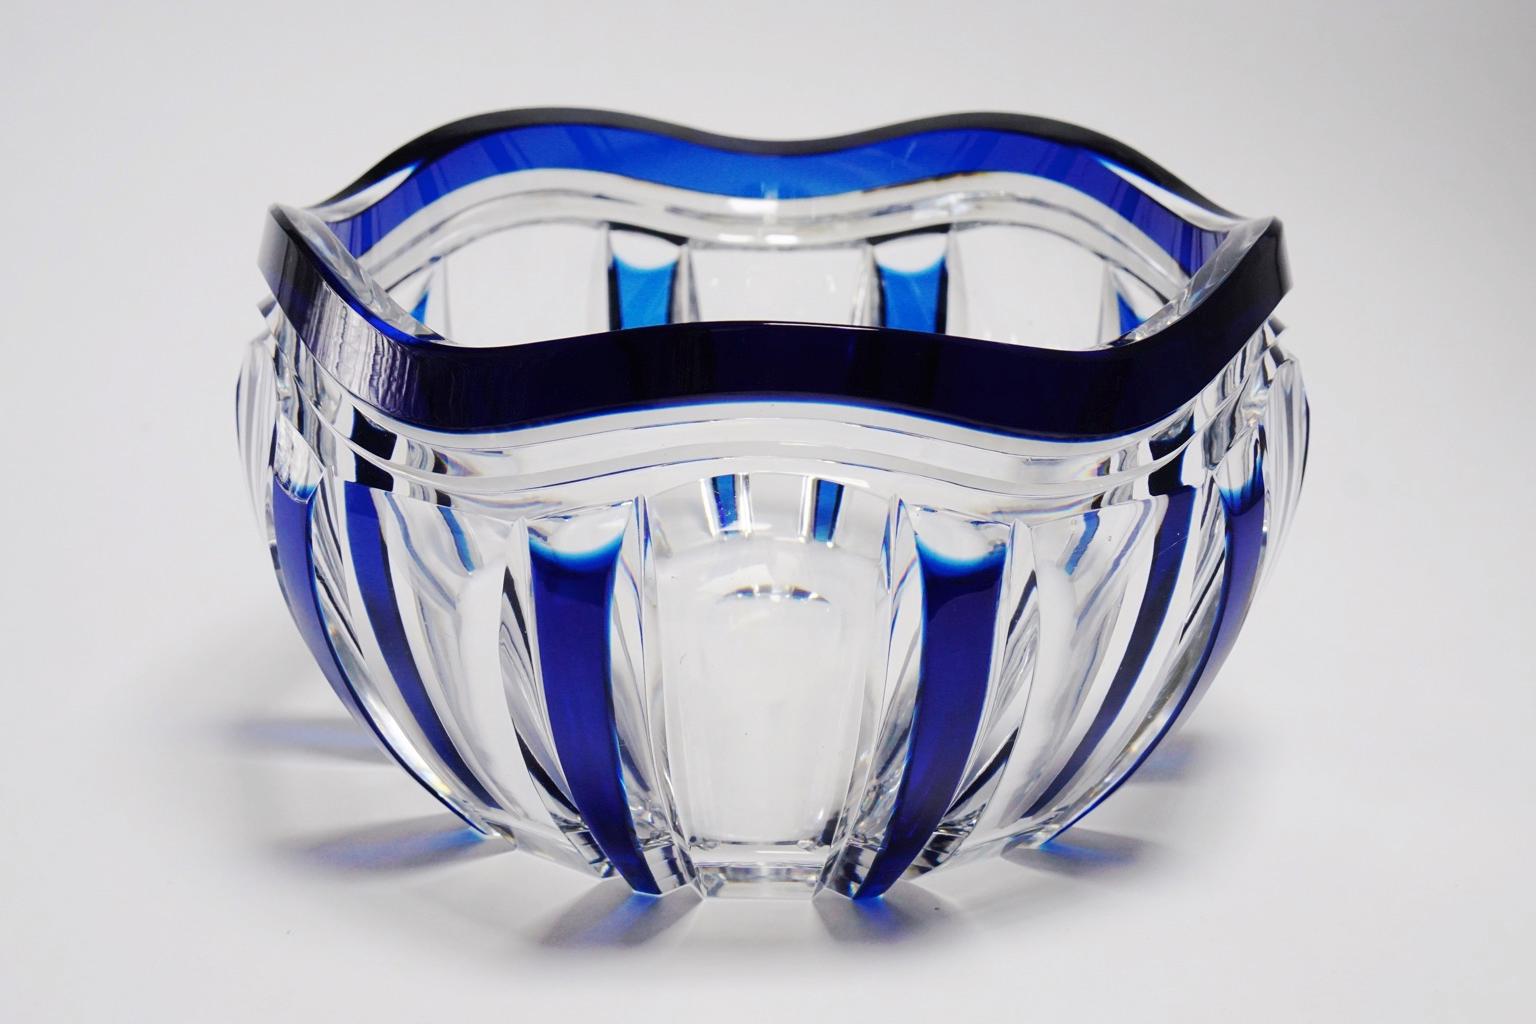 Val Saint Lambert blue overlaid Pietro crystal vase by Joseph Simon.

Size: Diameter top 20 cm, height 12-13 cm.